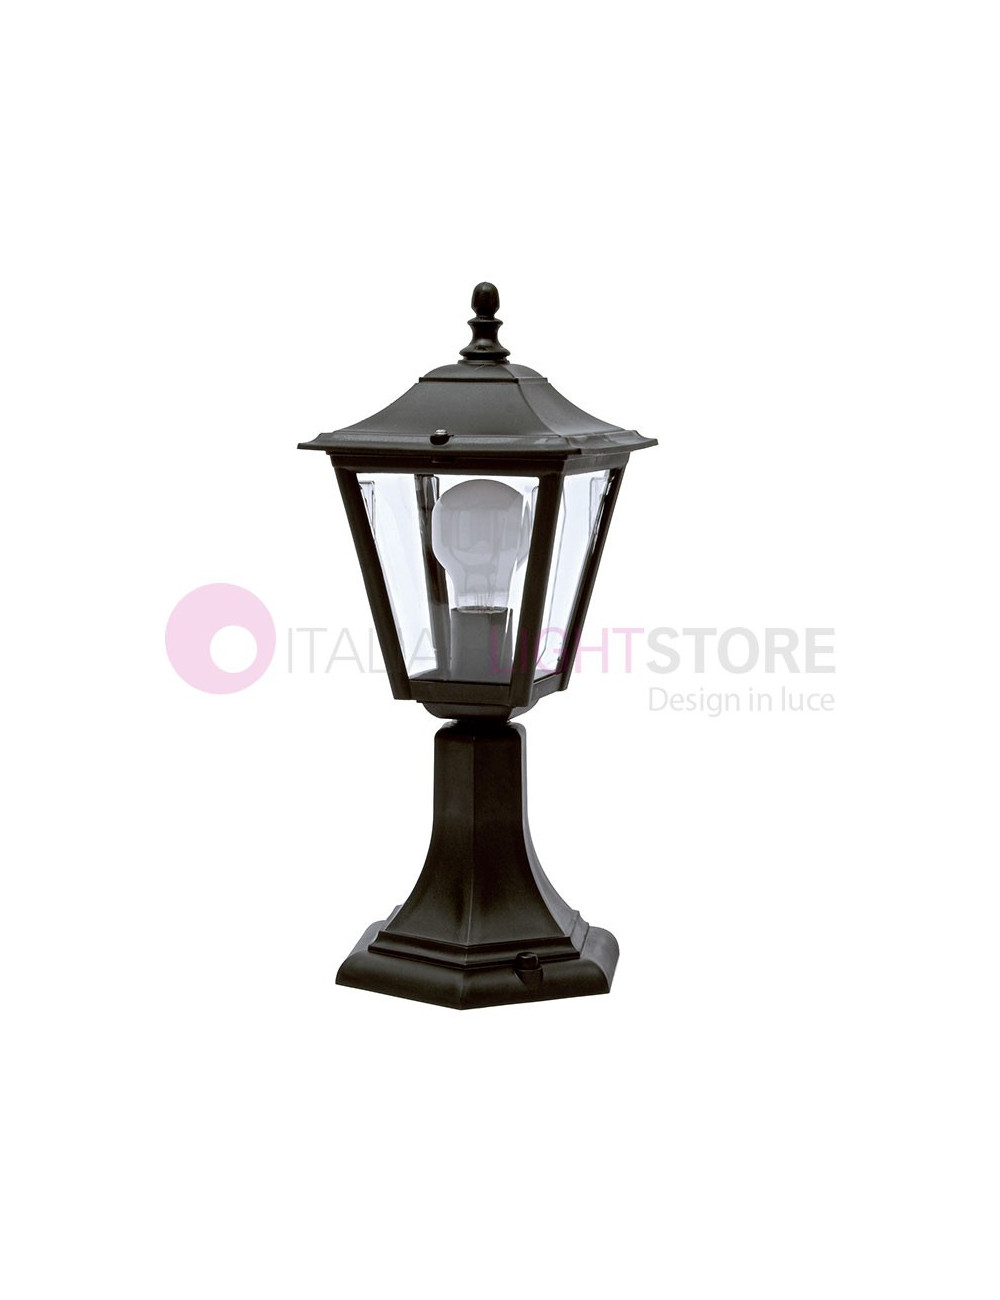 PRAGA Mini Street Lamp for Garden and Exterior Classic Traditional